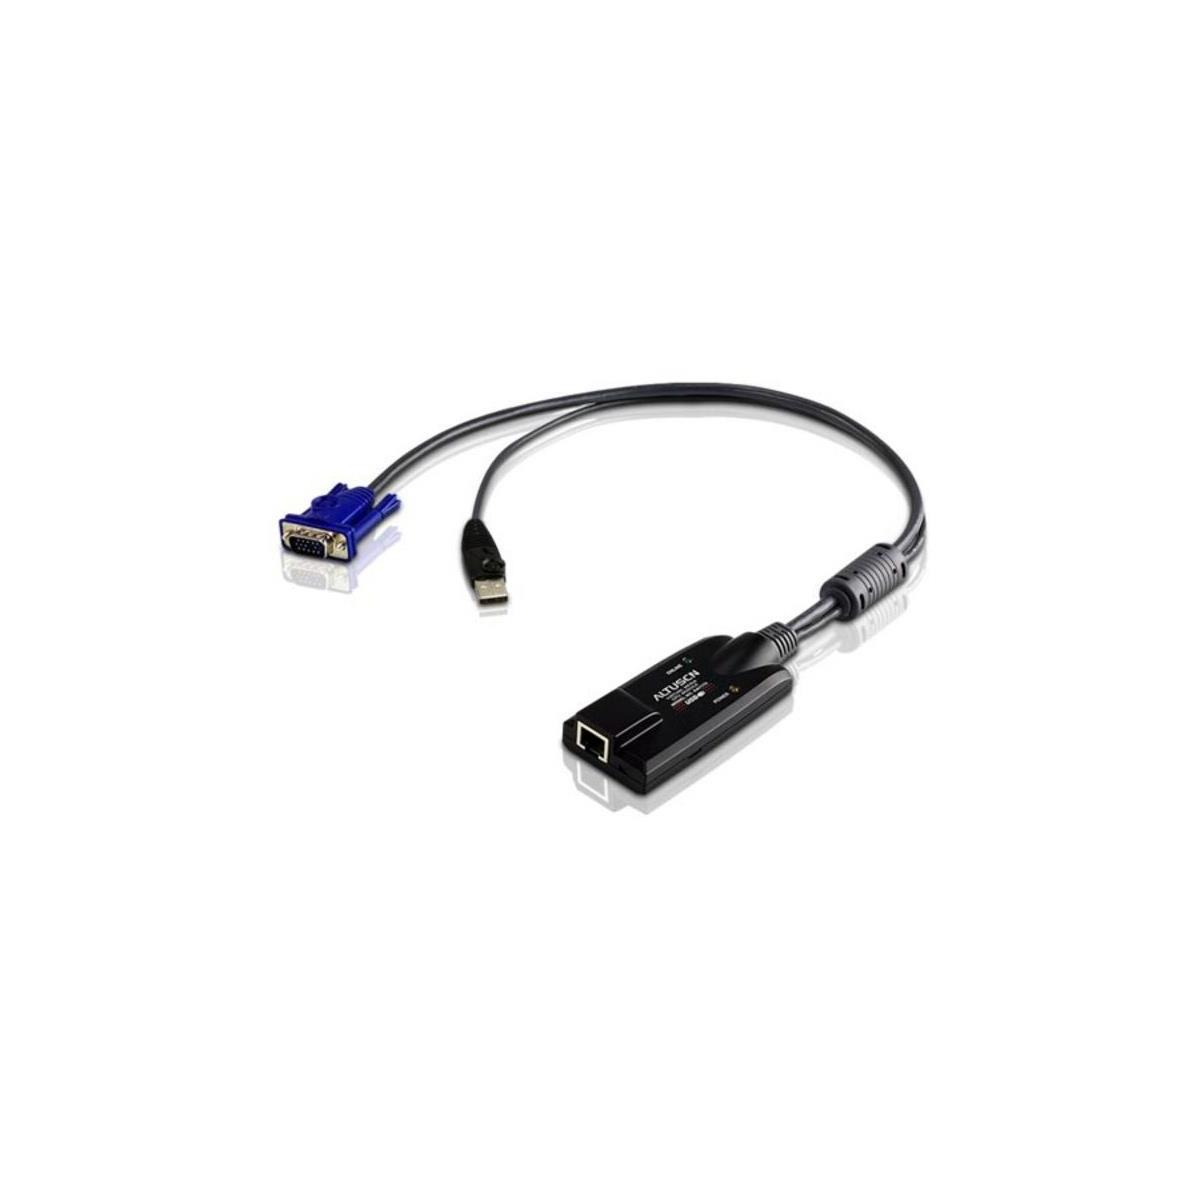 Photos - Other for Computer ATEN KA7175 USB Virtual Media KVM Adapter Cable, CPU Module 